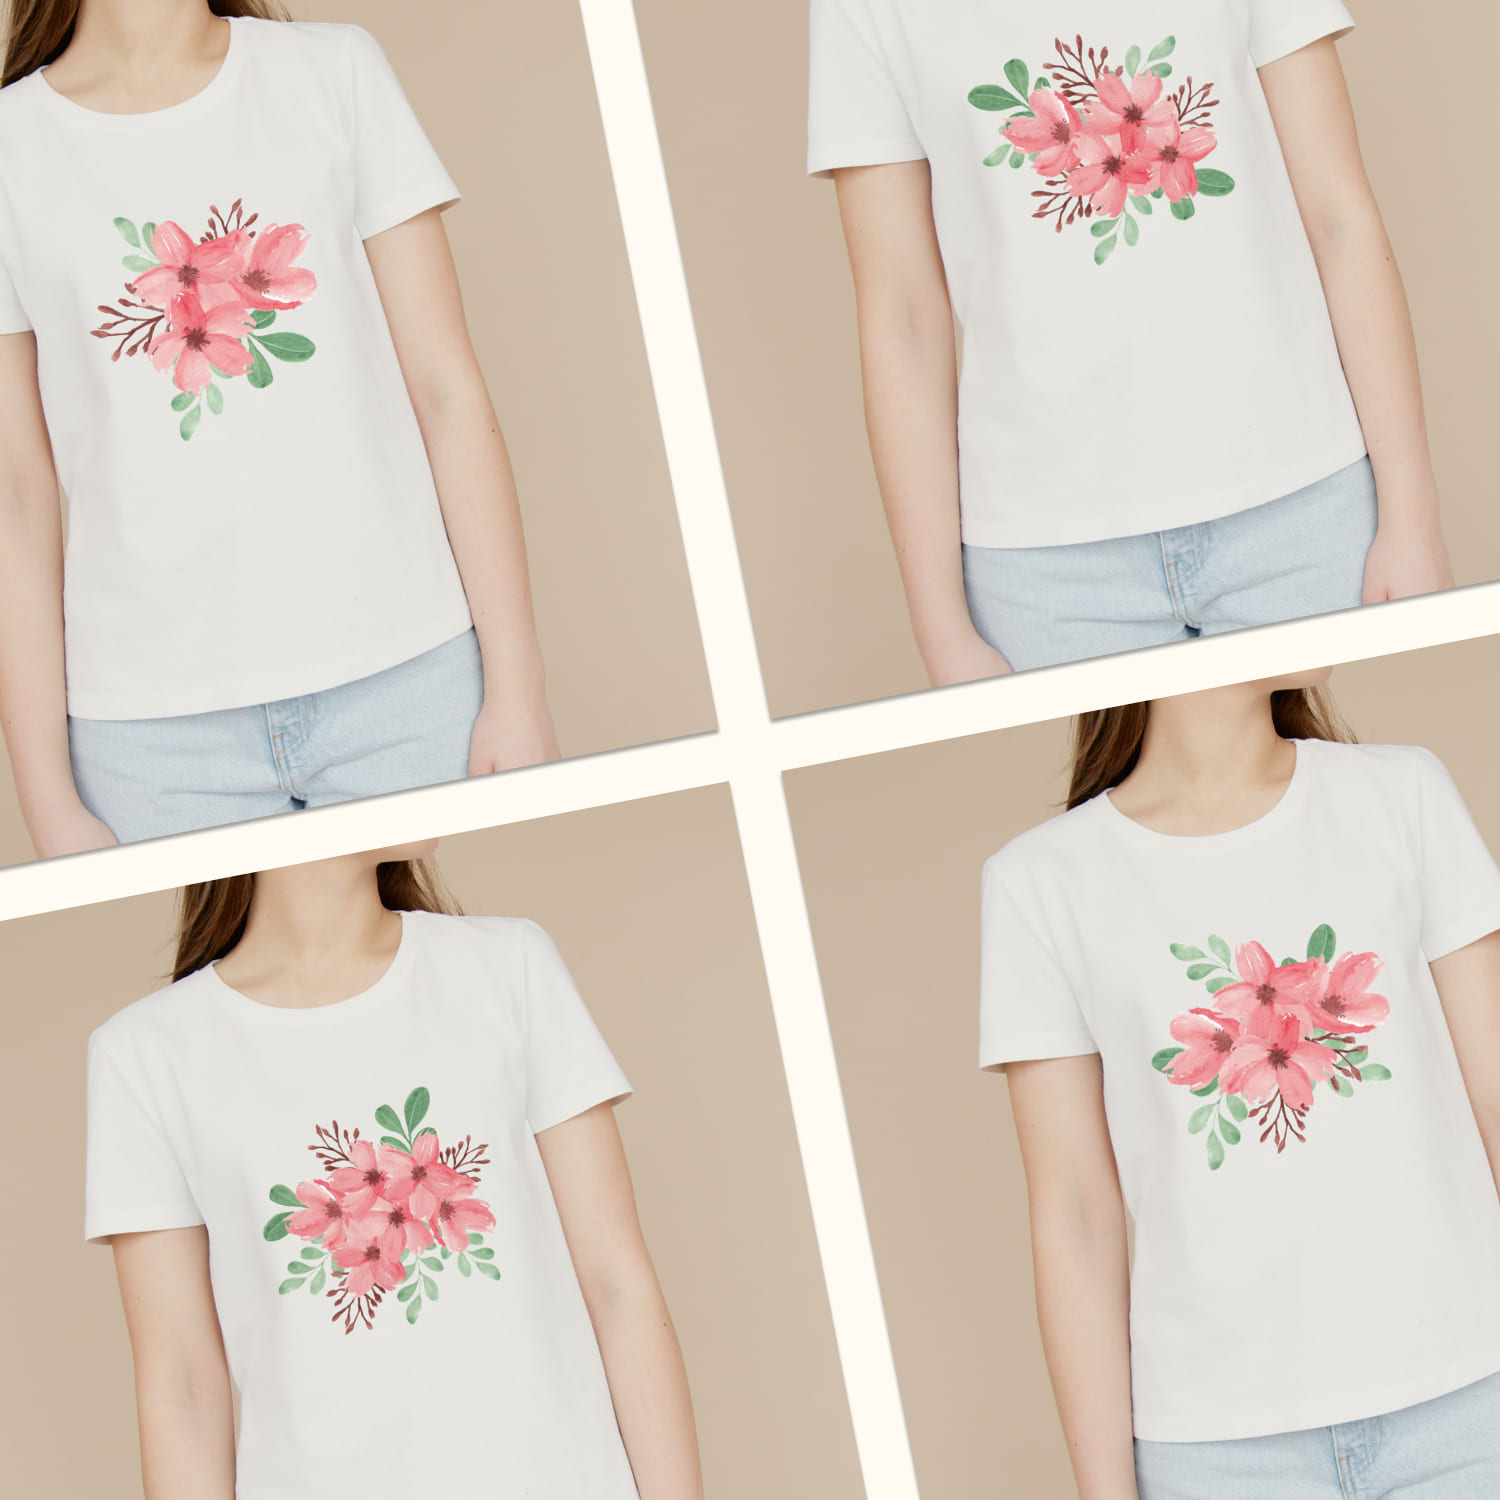 Preview scherry blossom t shirt designs.